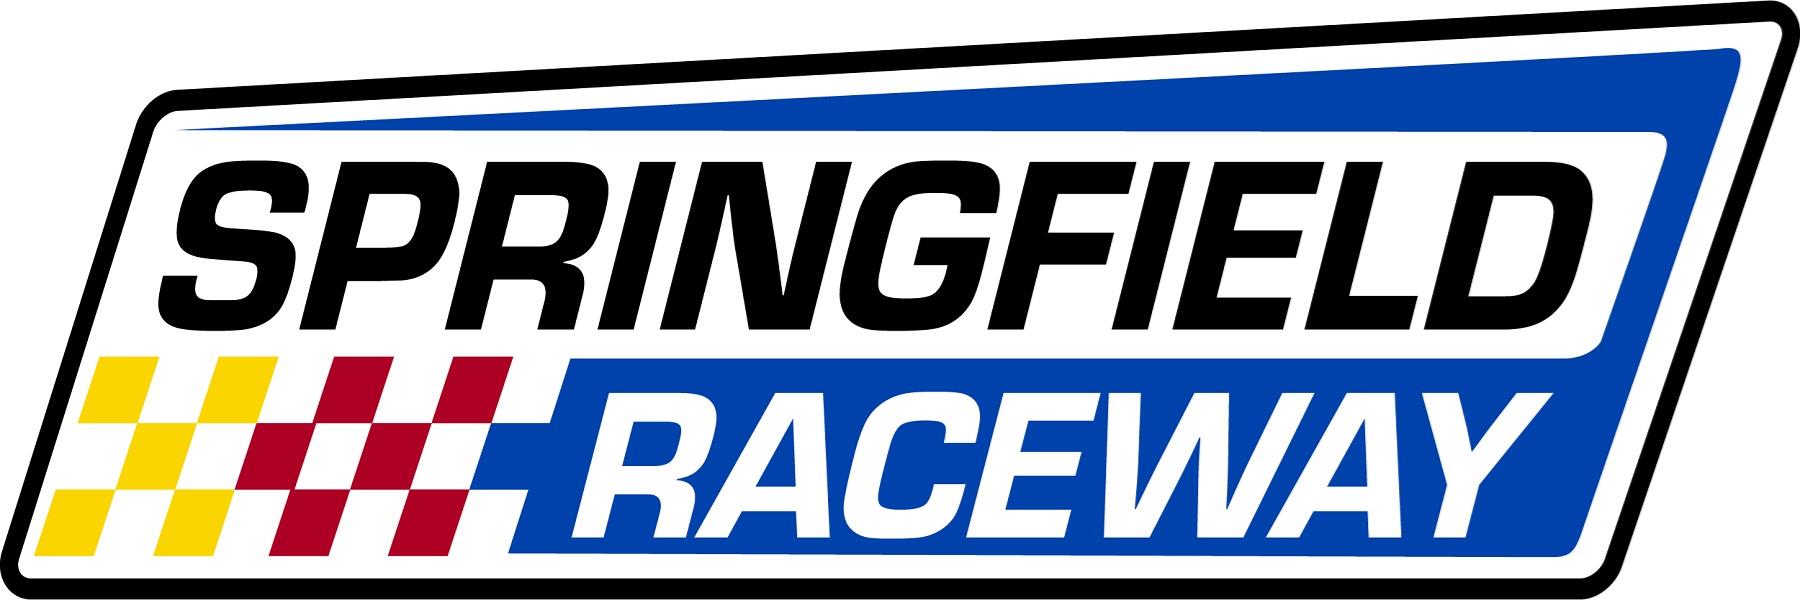 11/19/2021 - Springfield Raceway